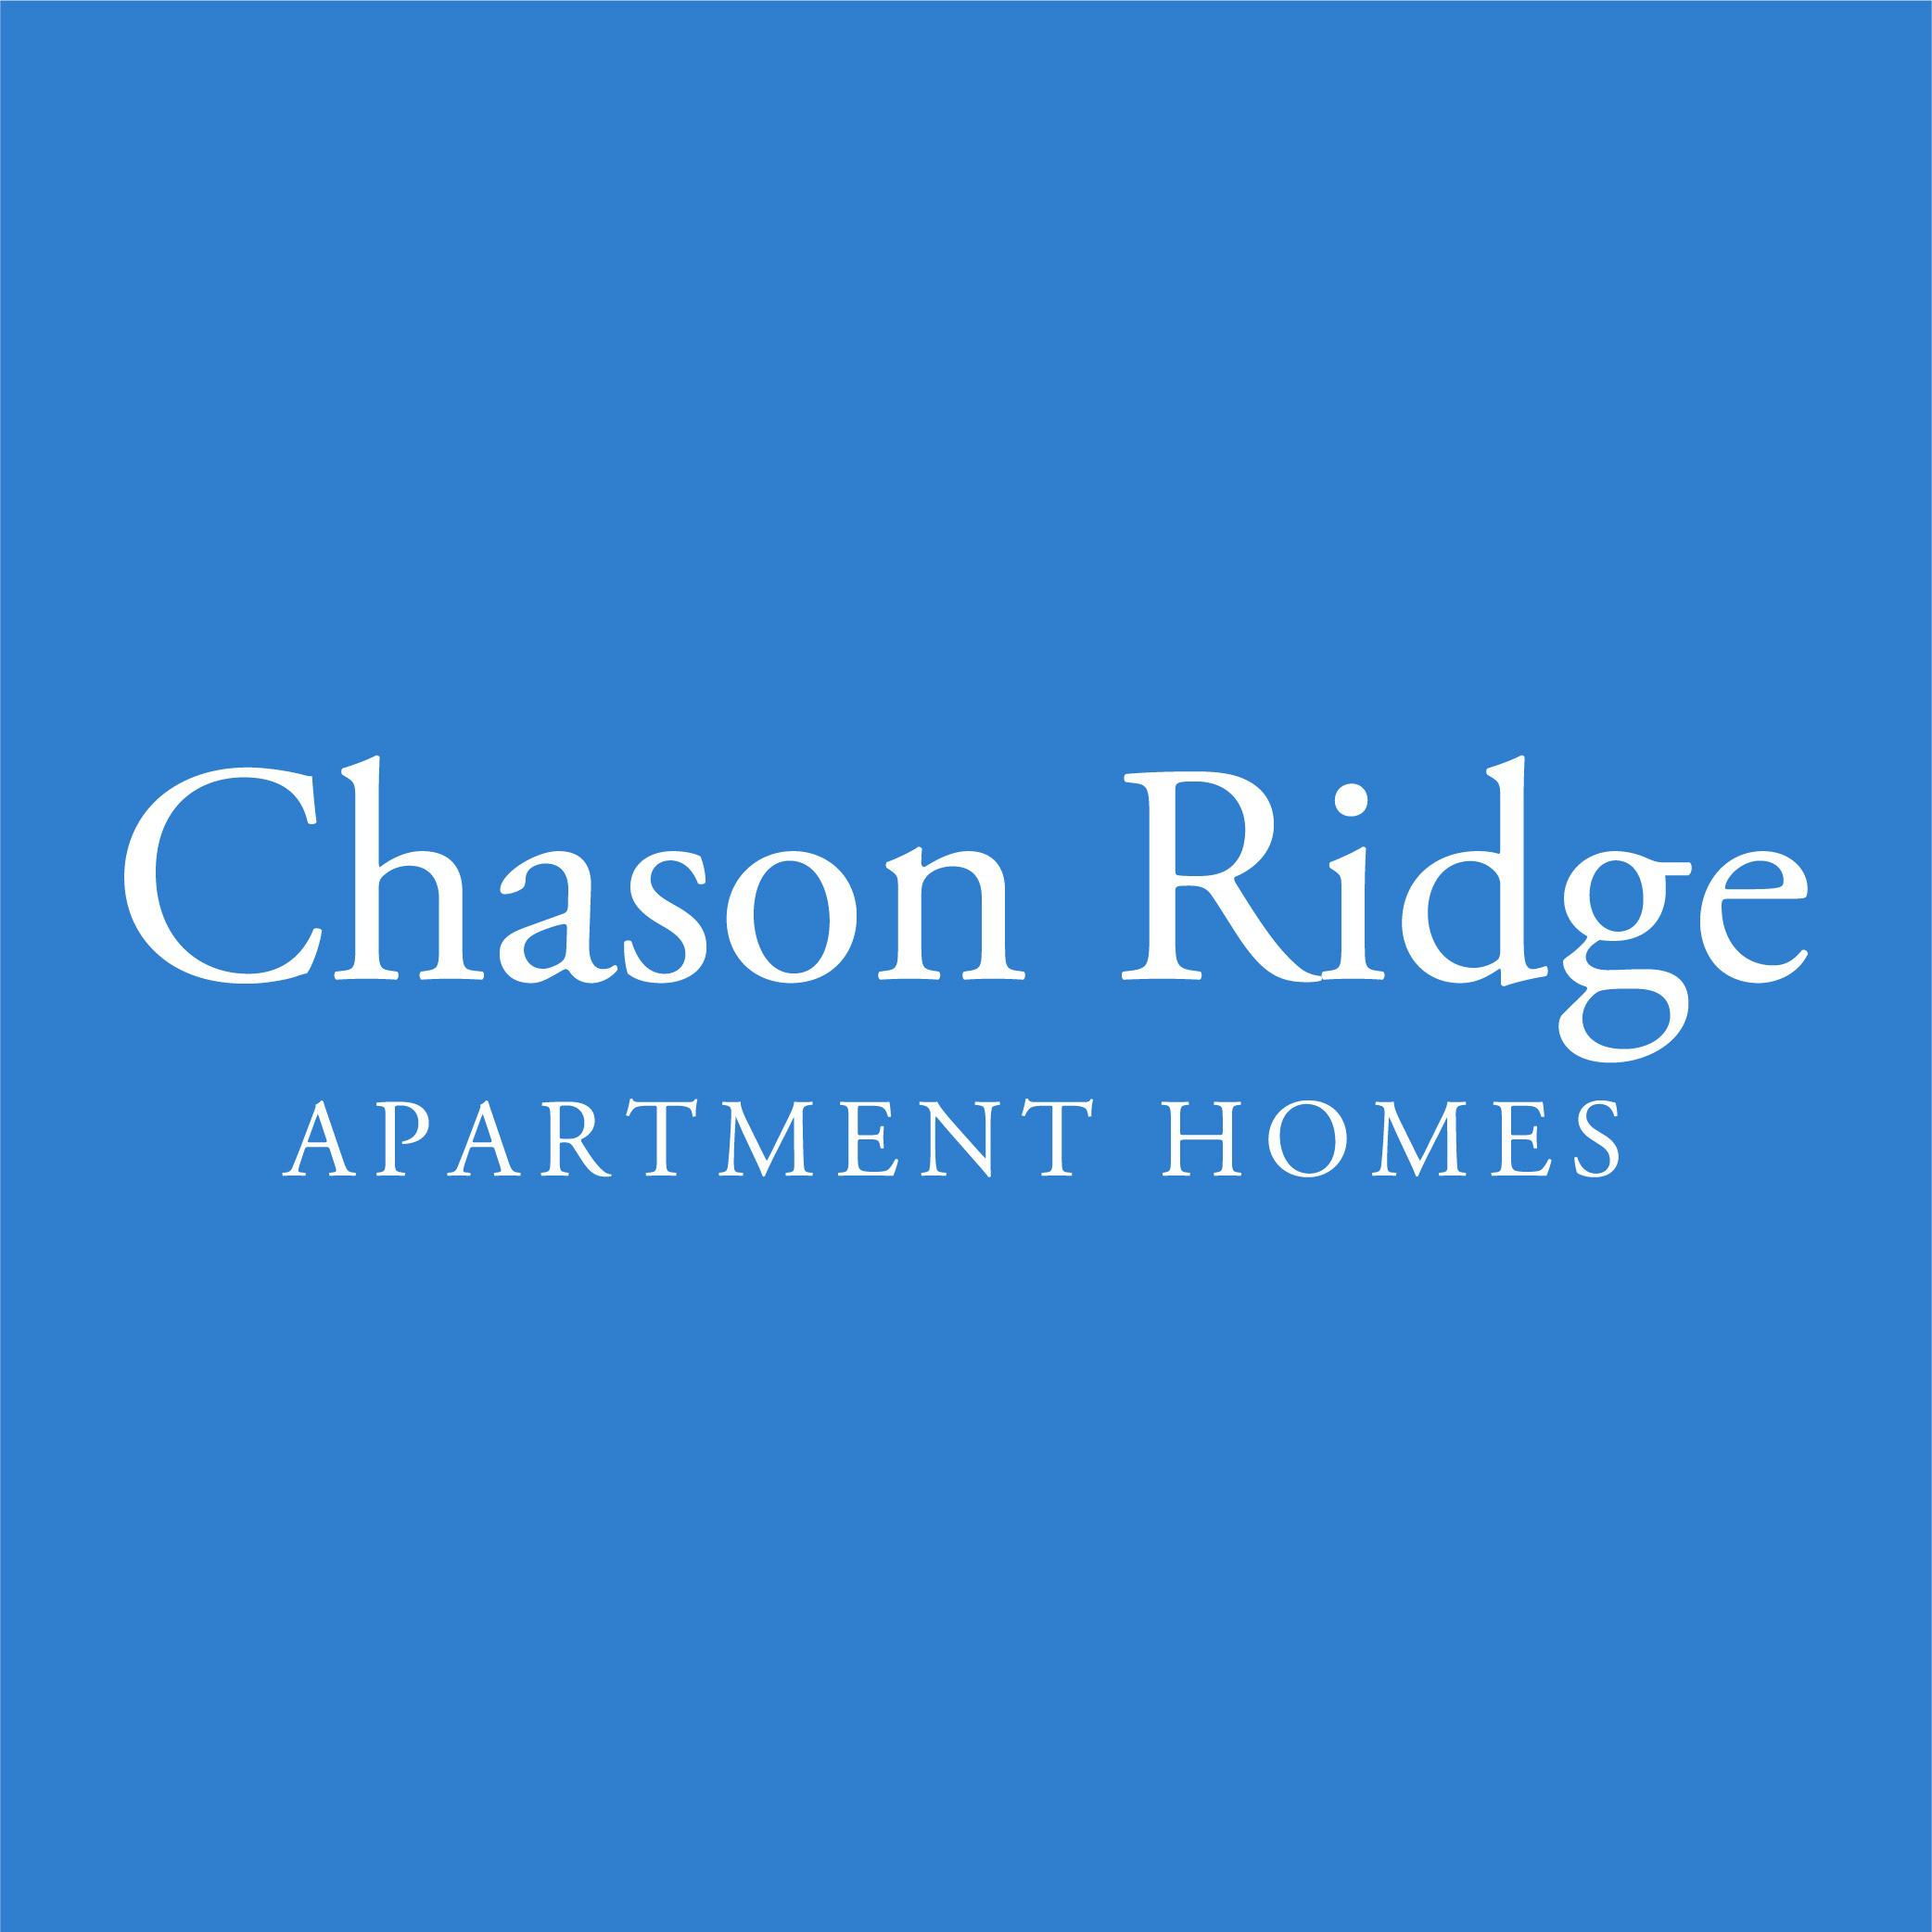 Chason Ridge Apartment Homes